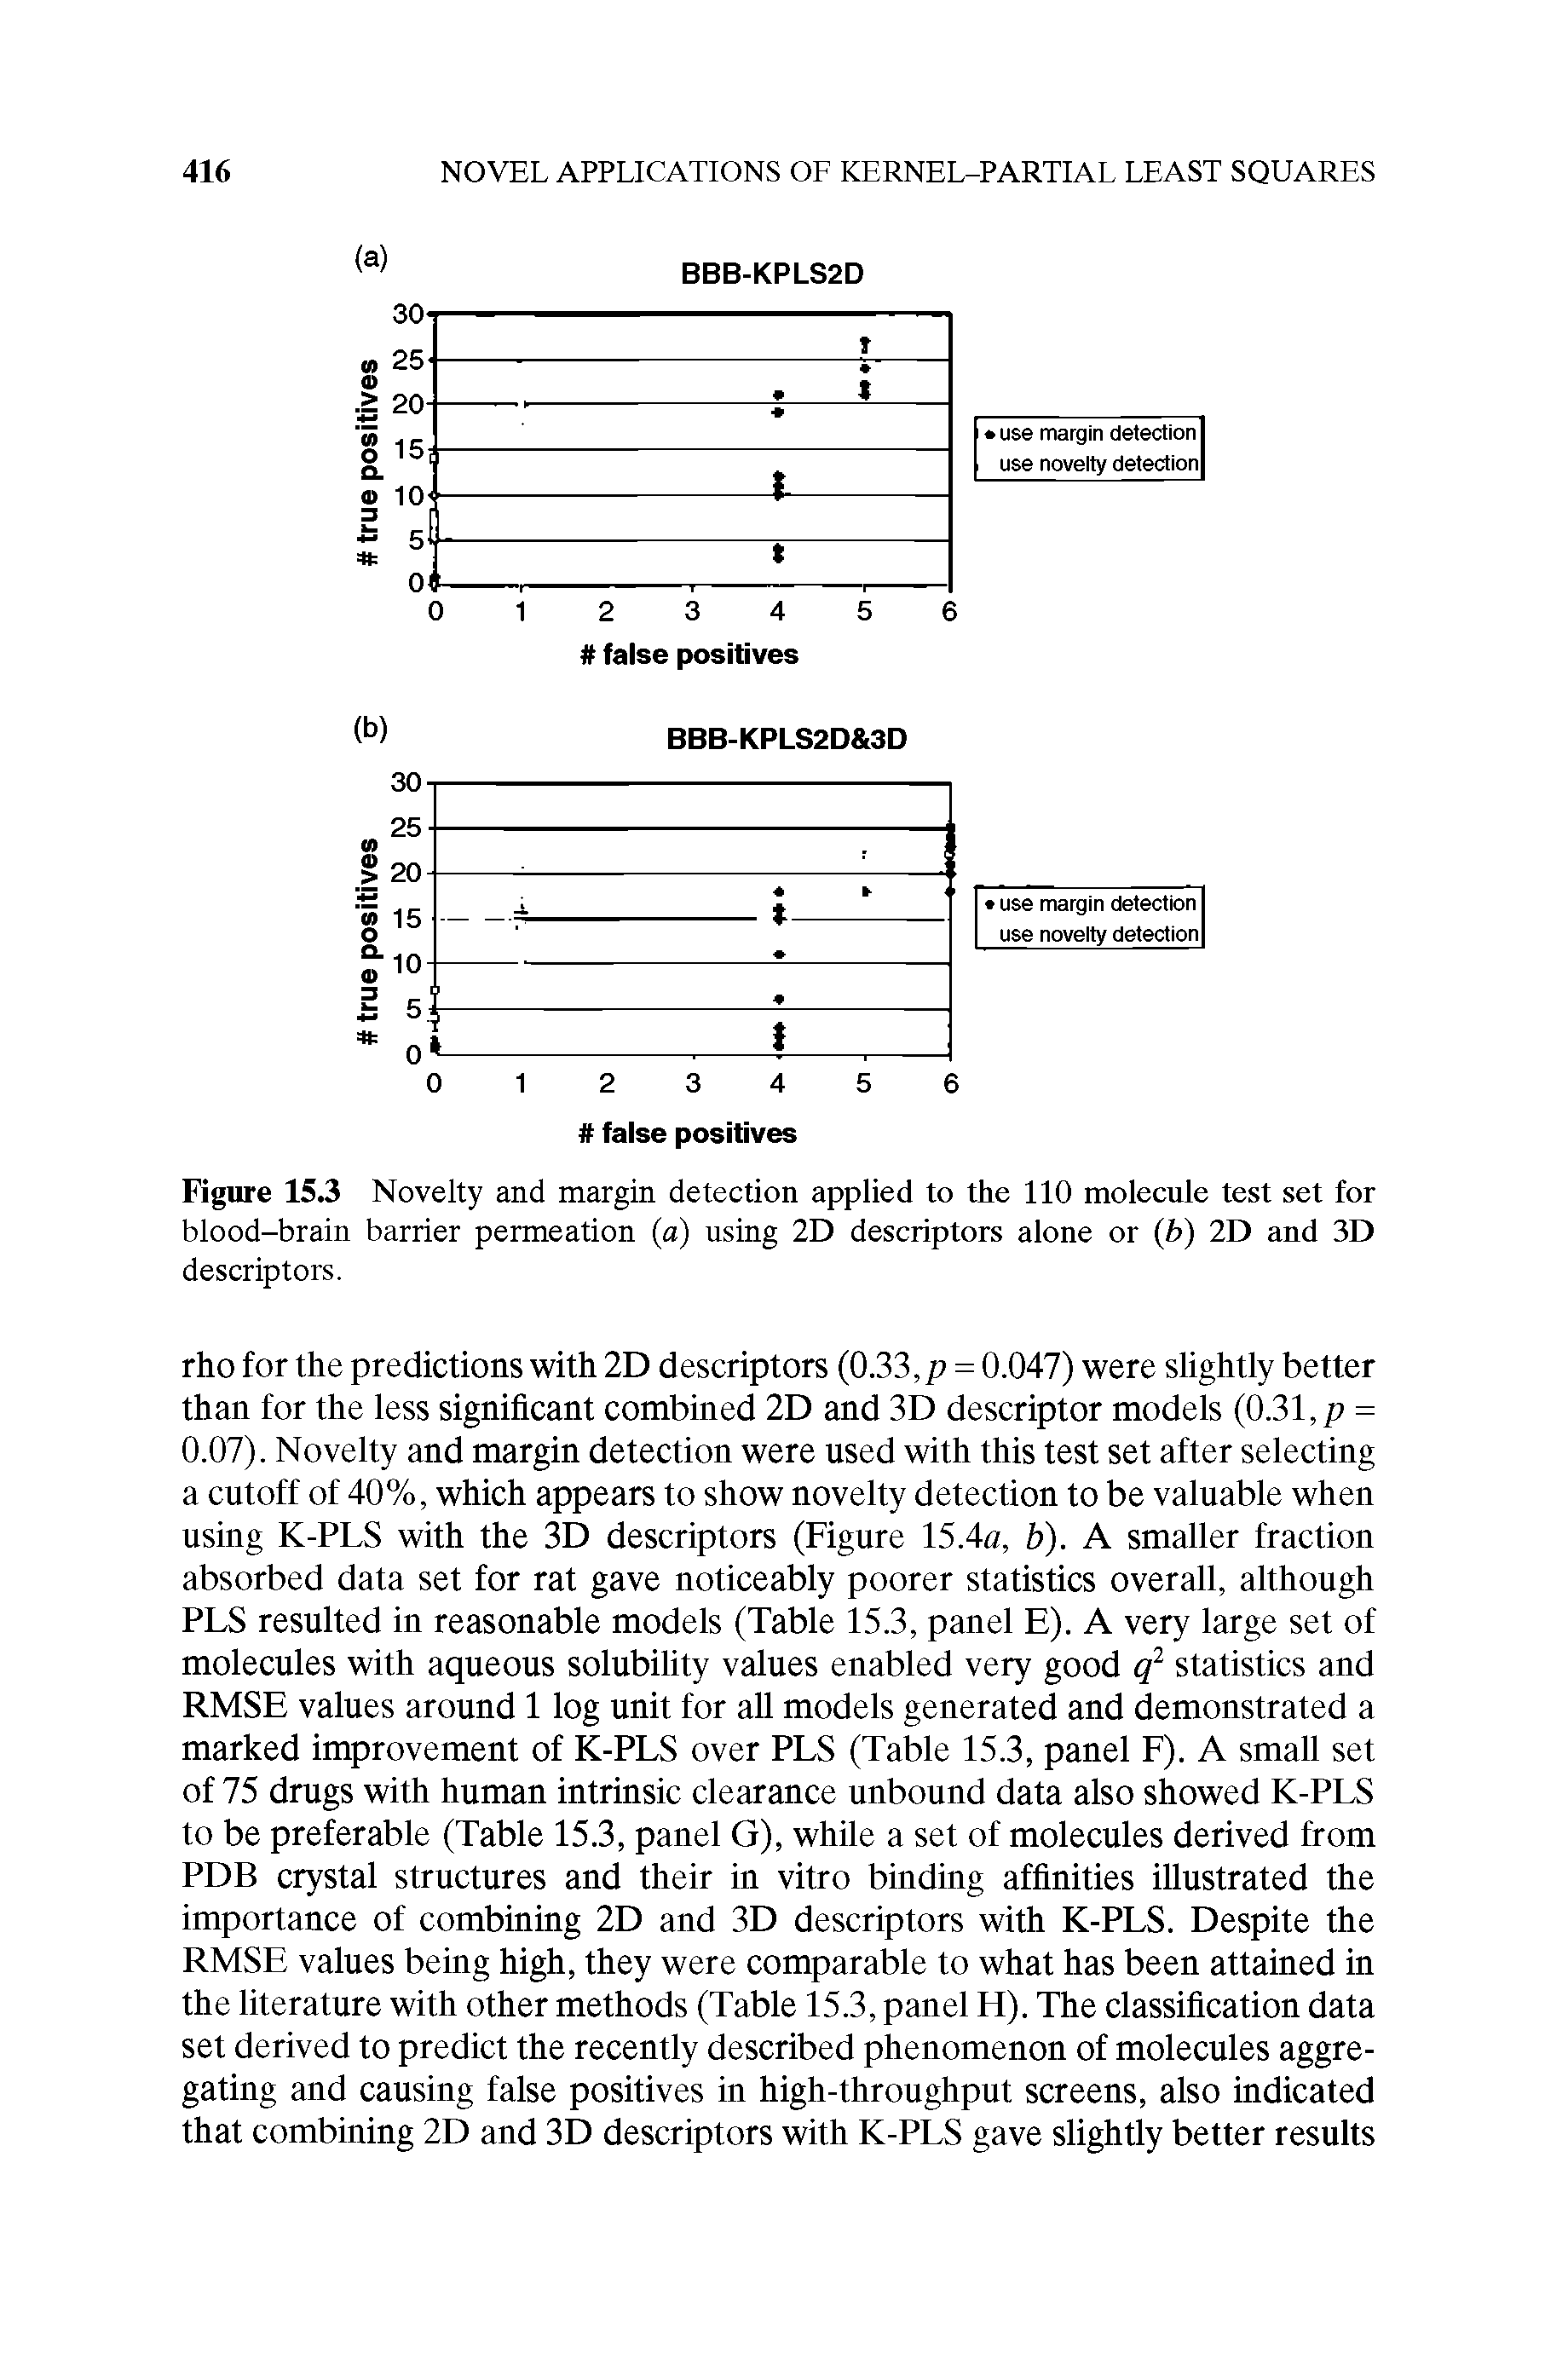 Figure 15.3 Novelty and margin detection applied to the 110 molecule test set for blood-brain barrier permeation (a) using 2D descriptors alone or (b) 2D and 3D descriptors.